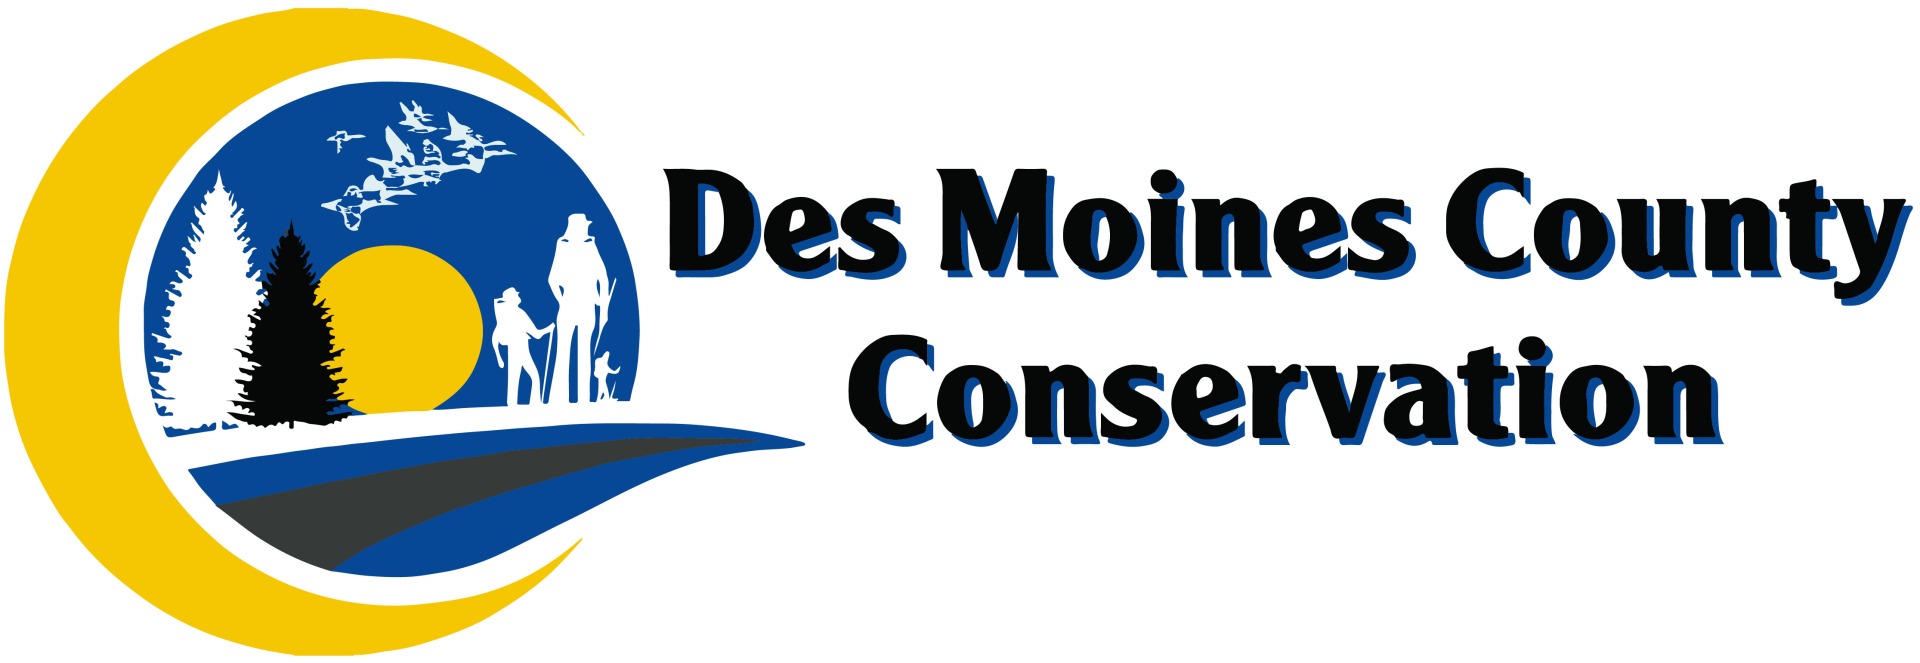 Des Moines County Conservation Logo